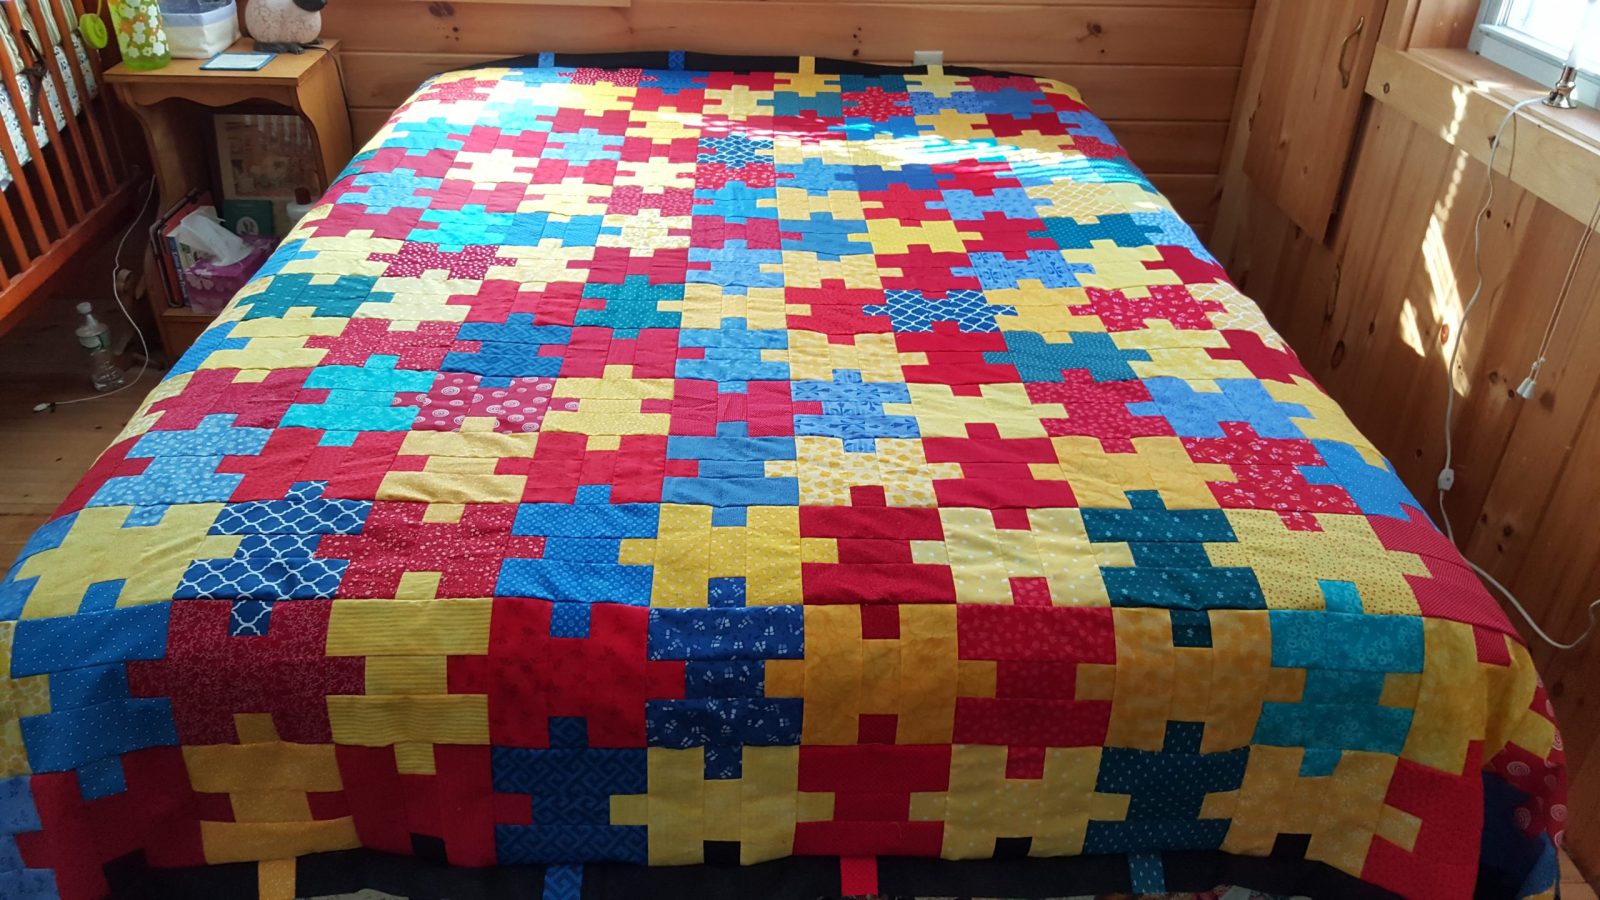 Puzzlie Quilt Top in Primary Colors